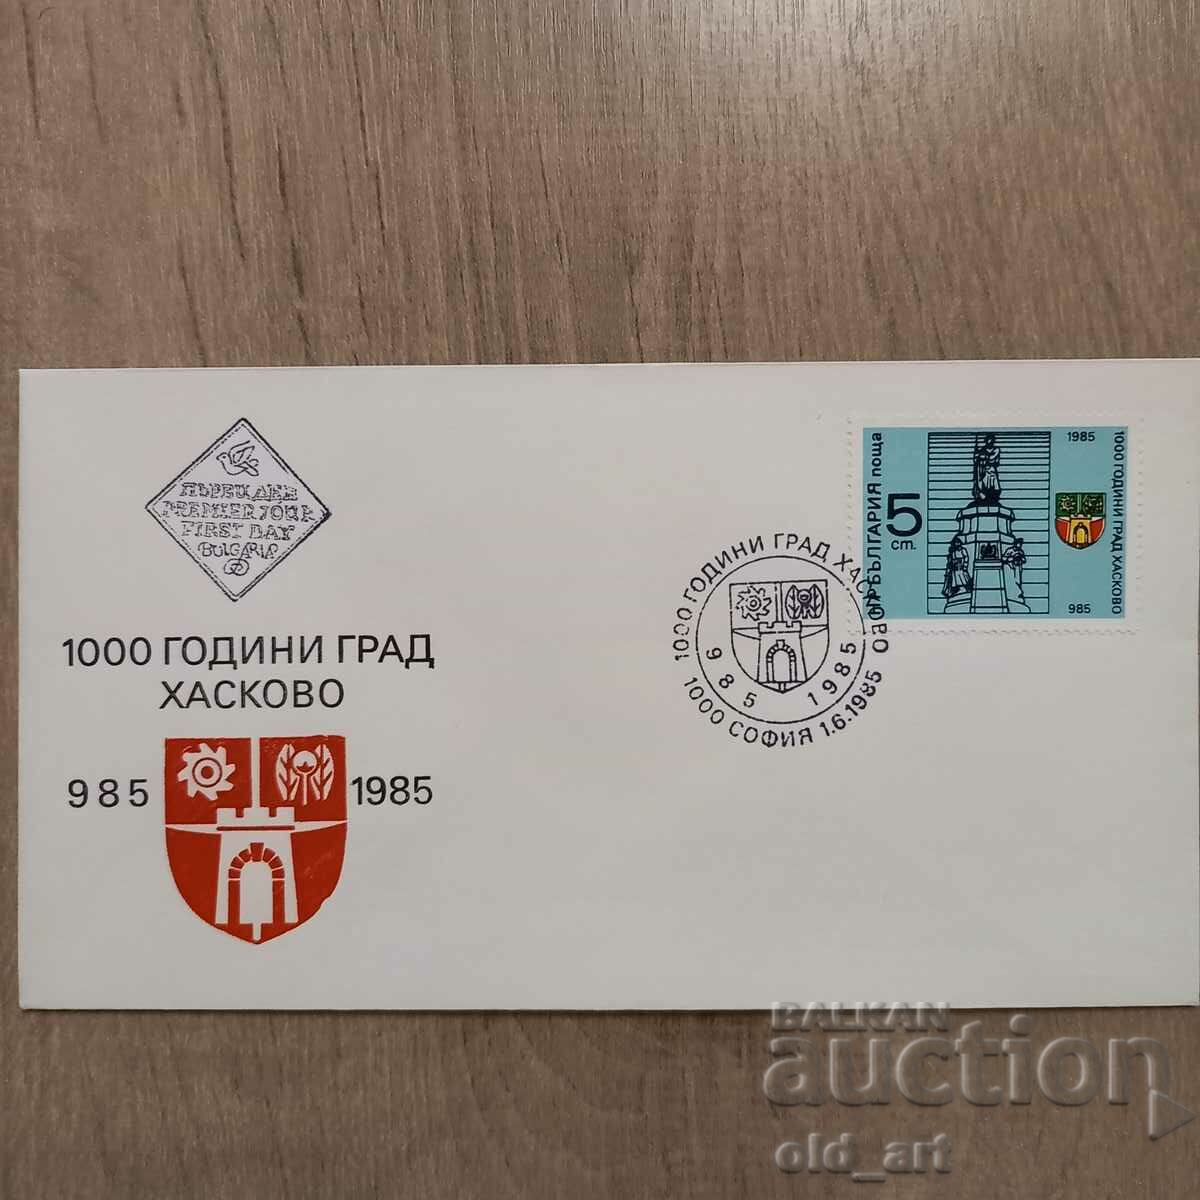 Postal envelope - 1000 years Haskovo